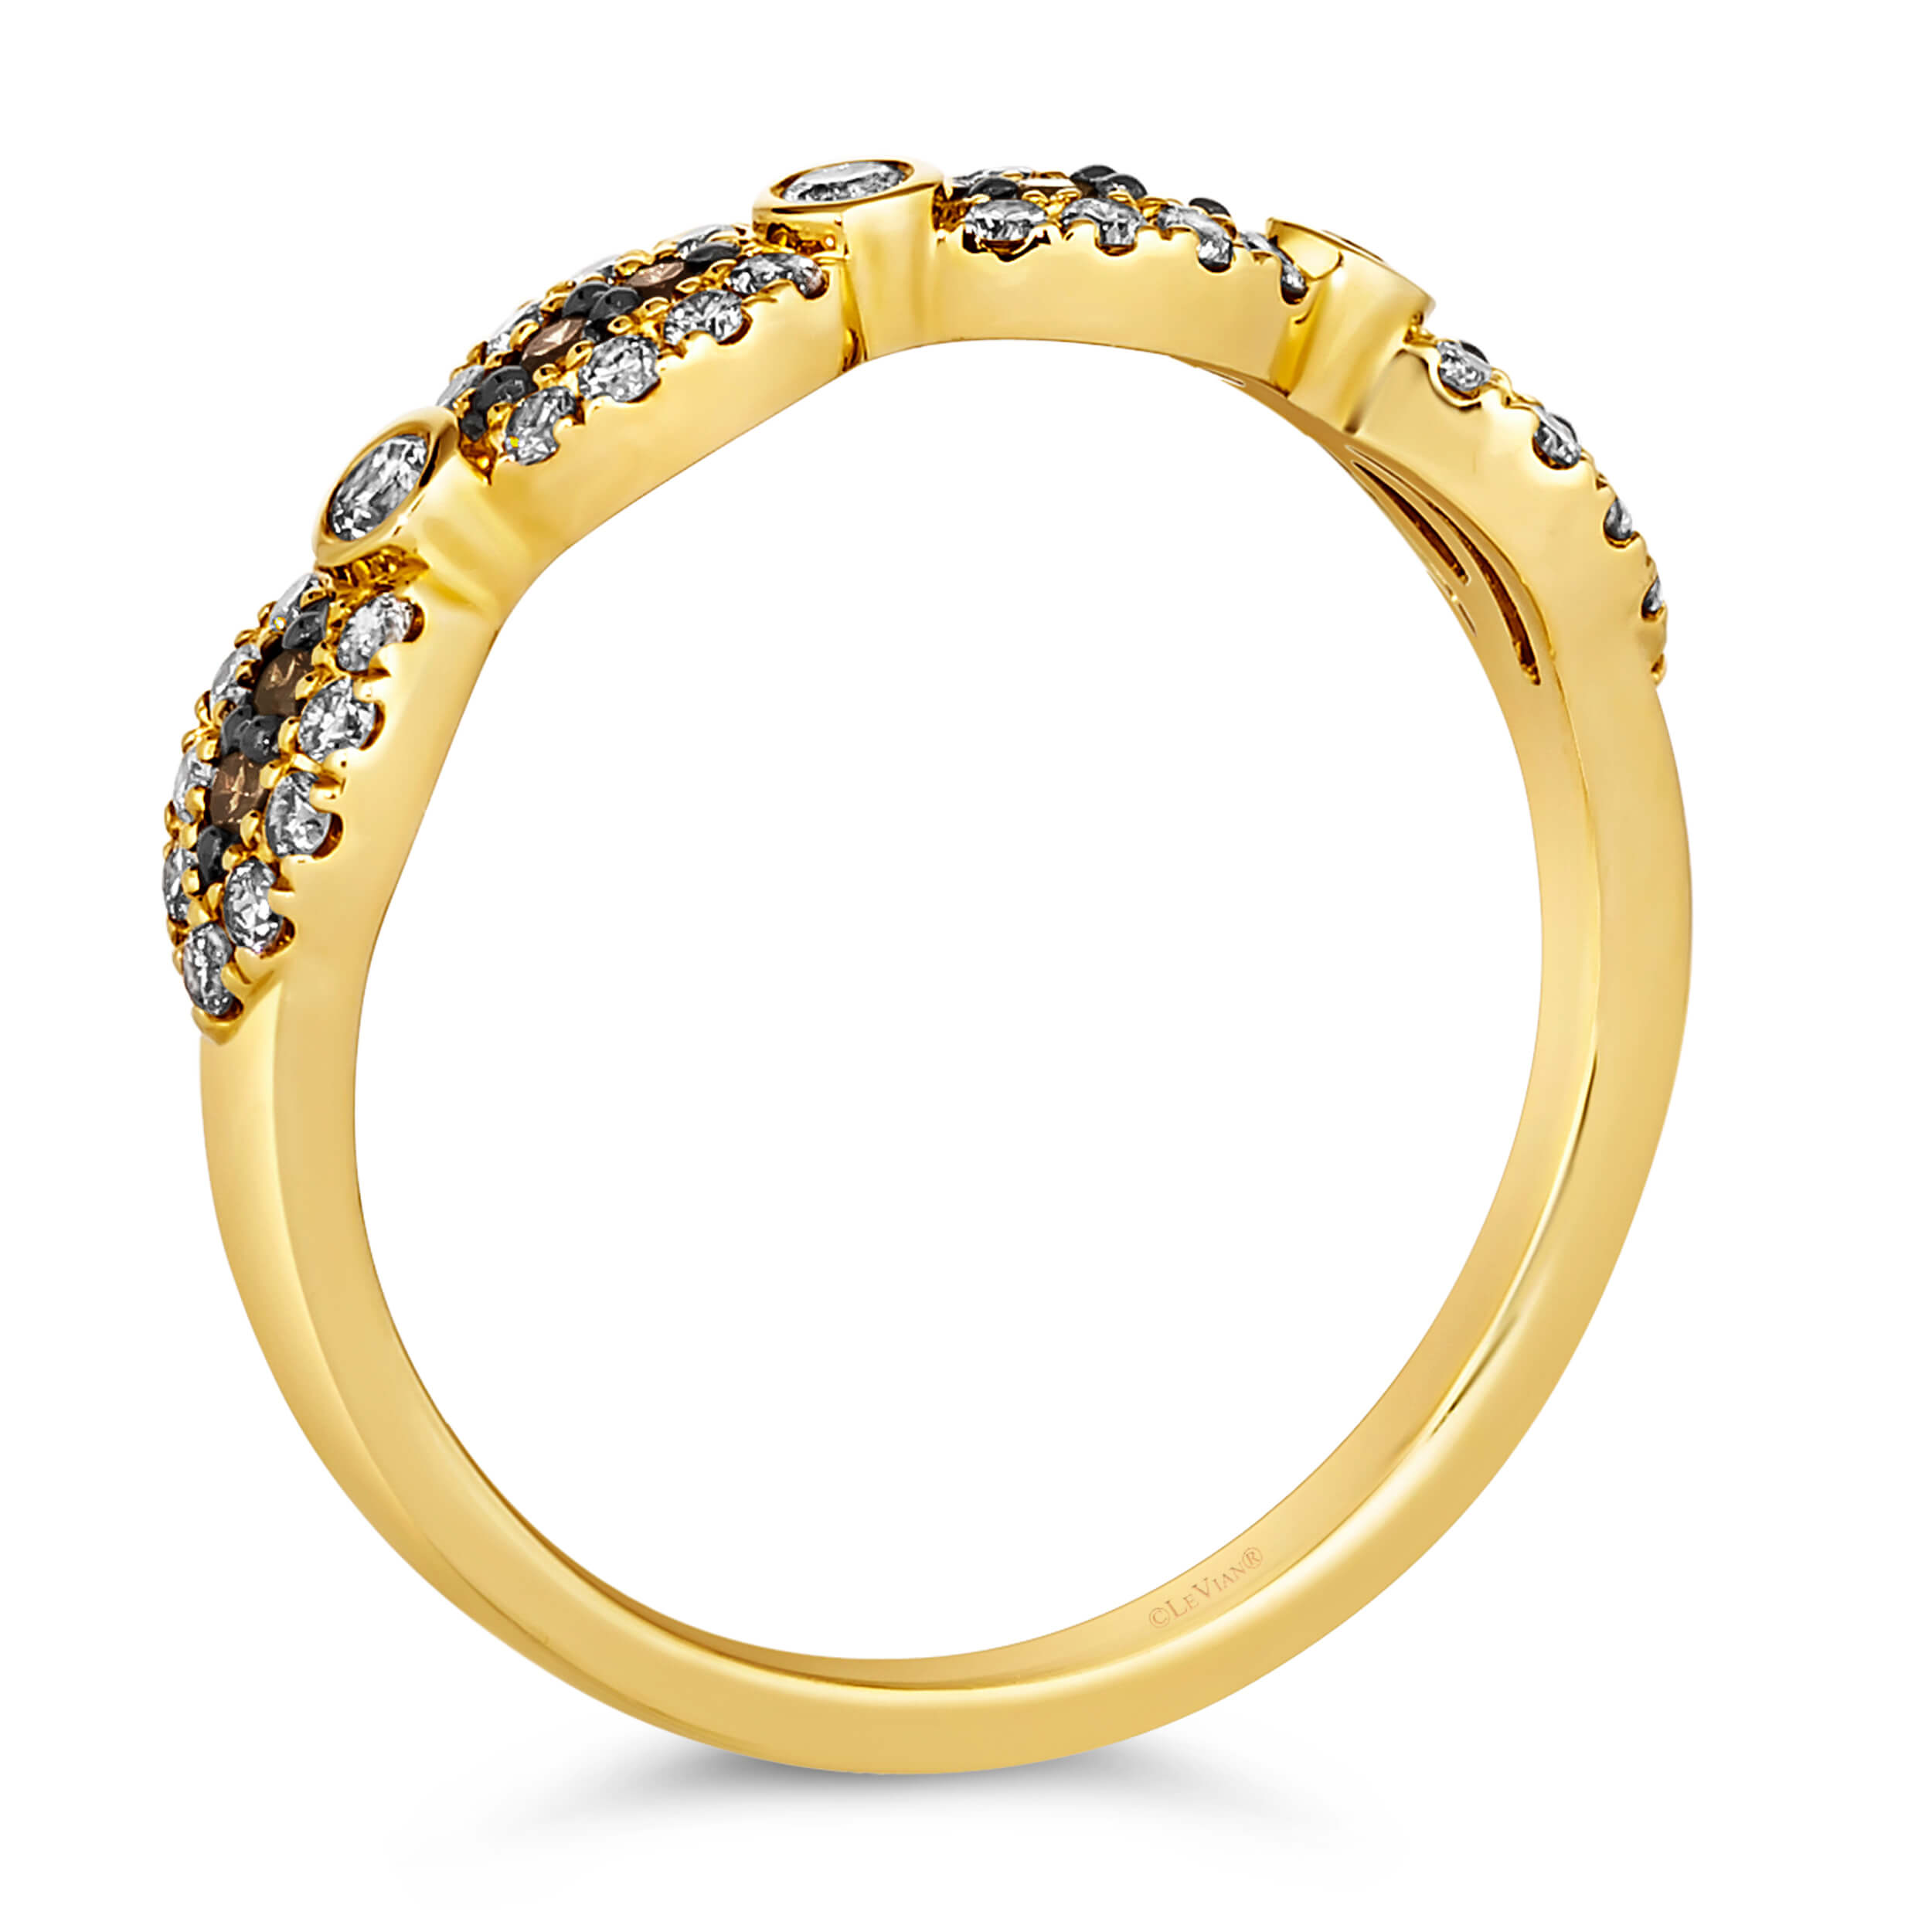 Inel din Aur Galben 14K cu Diamante 0.40Ct, articol WJQR 21A, previzualizare foto 3